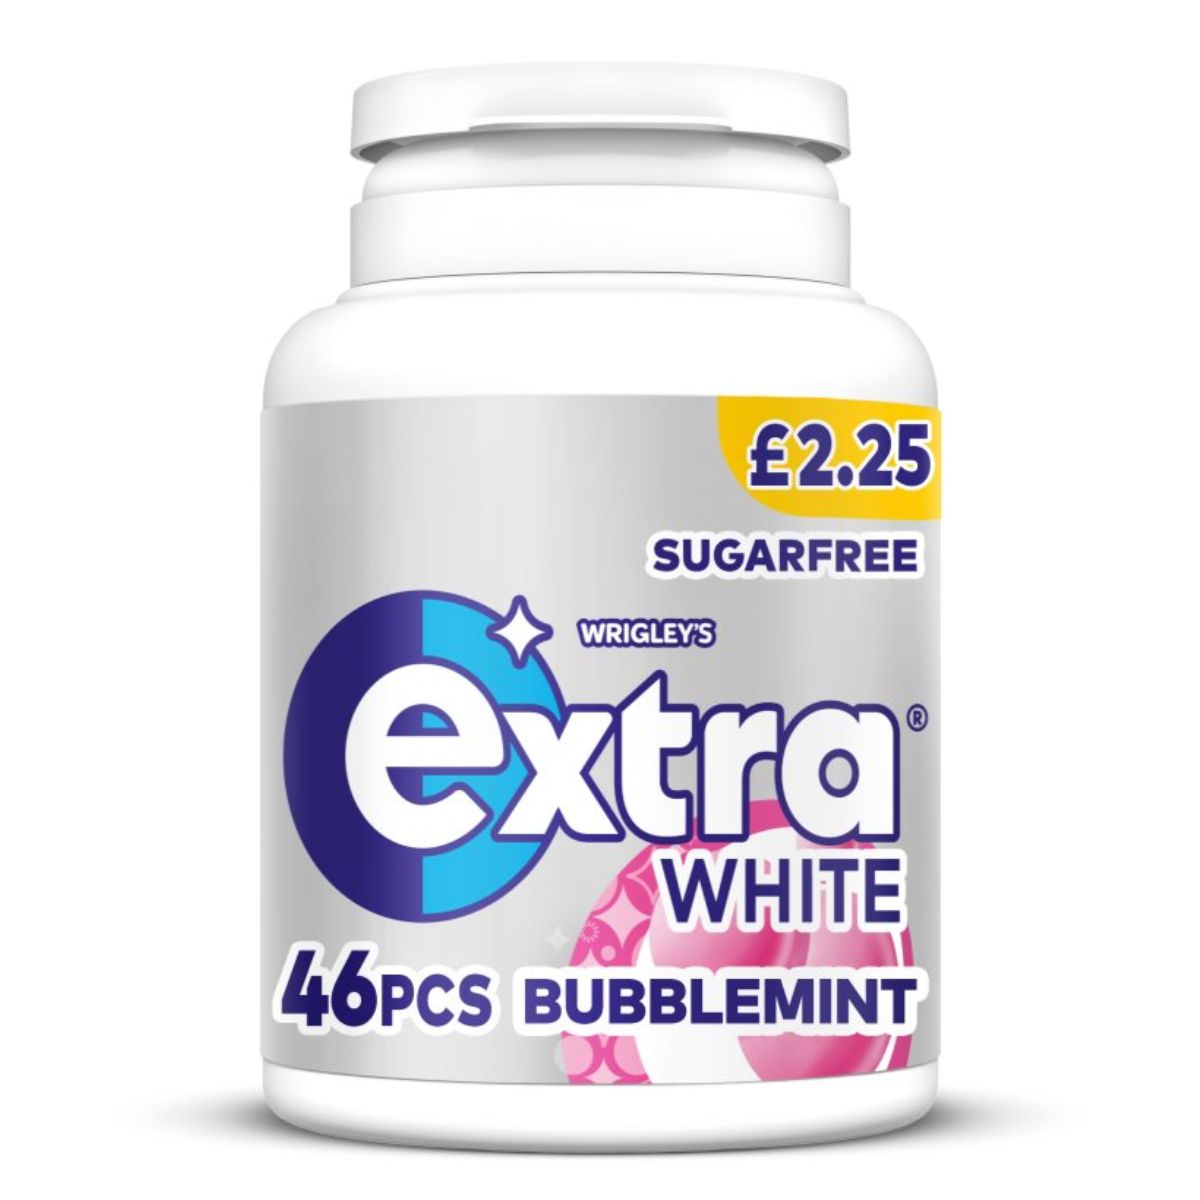 Extra-White Bubblemint Sugarfree Chewing Gum Bottle - 46pcs, 60 capsules.